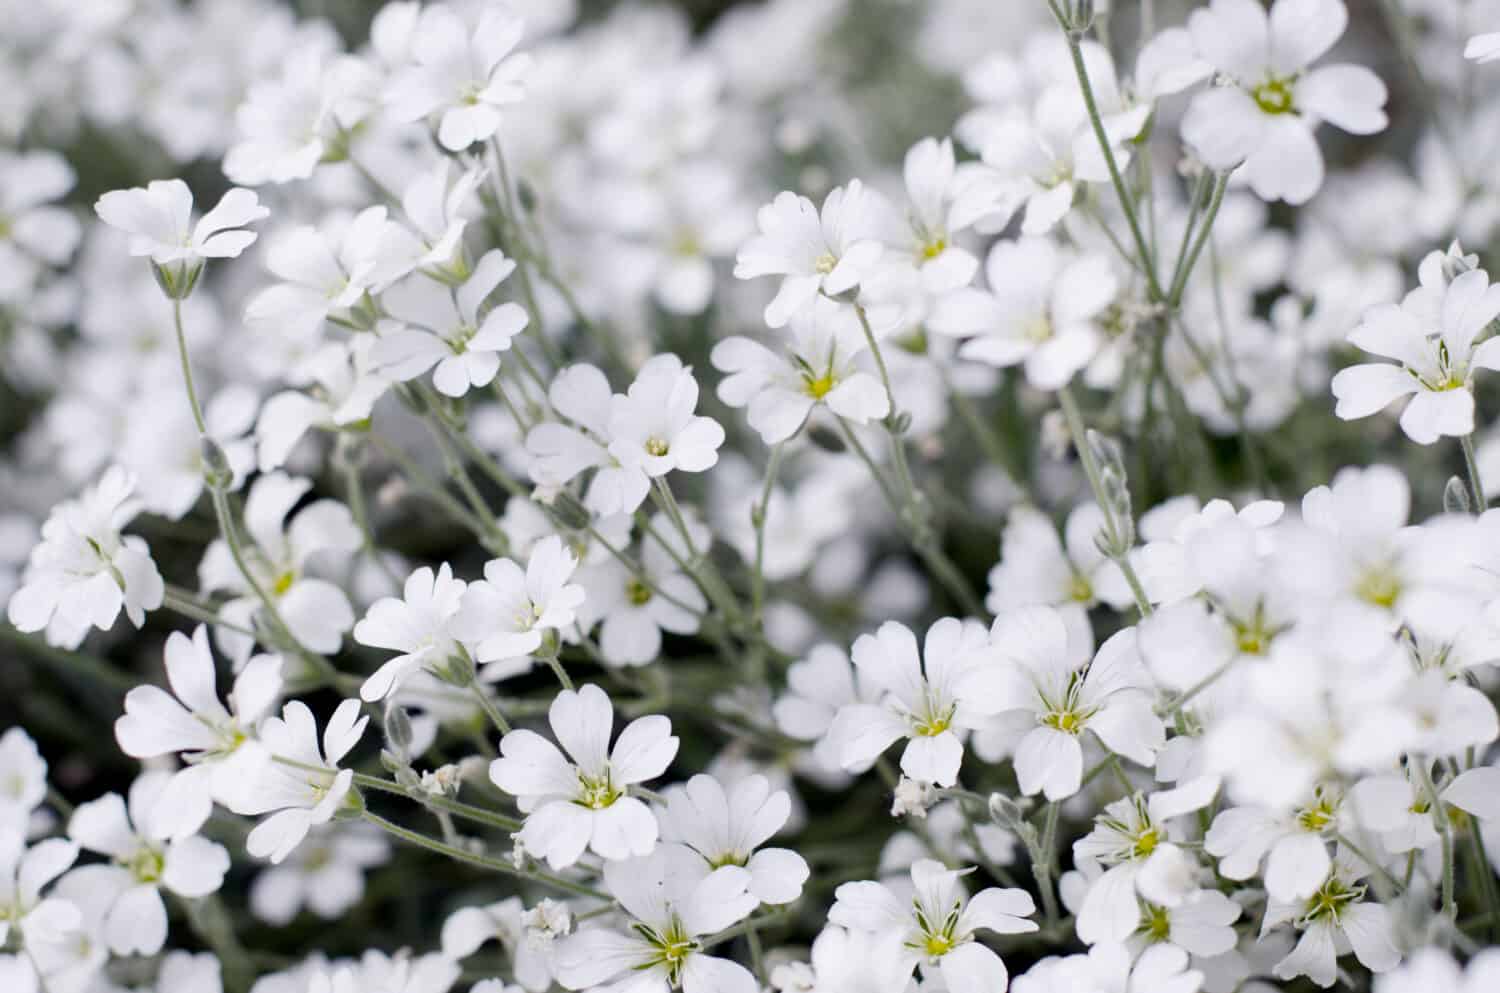 Cerastium tomentosum in bloom. Beautiful white summer flowers. Floral background.